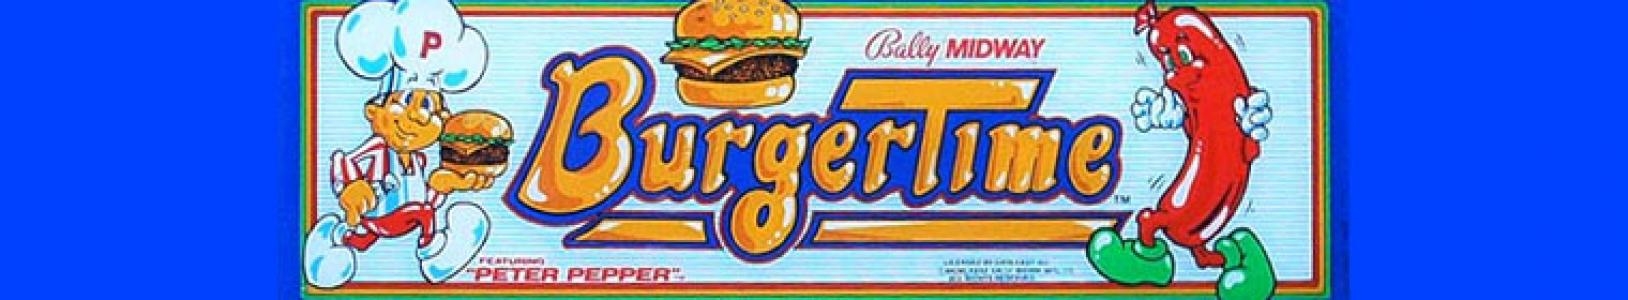 BurgerTime banner